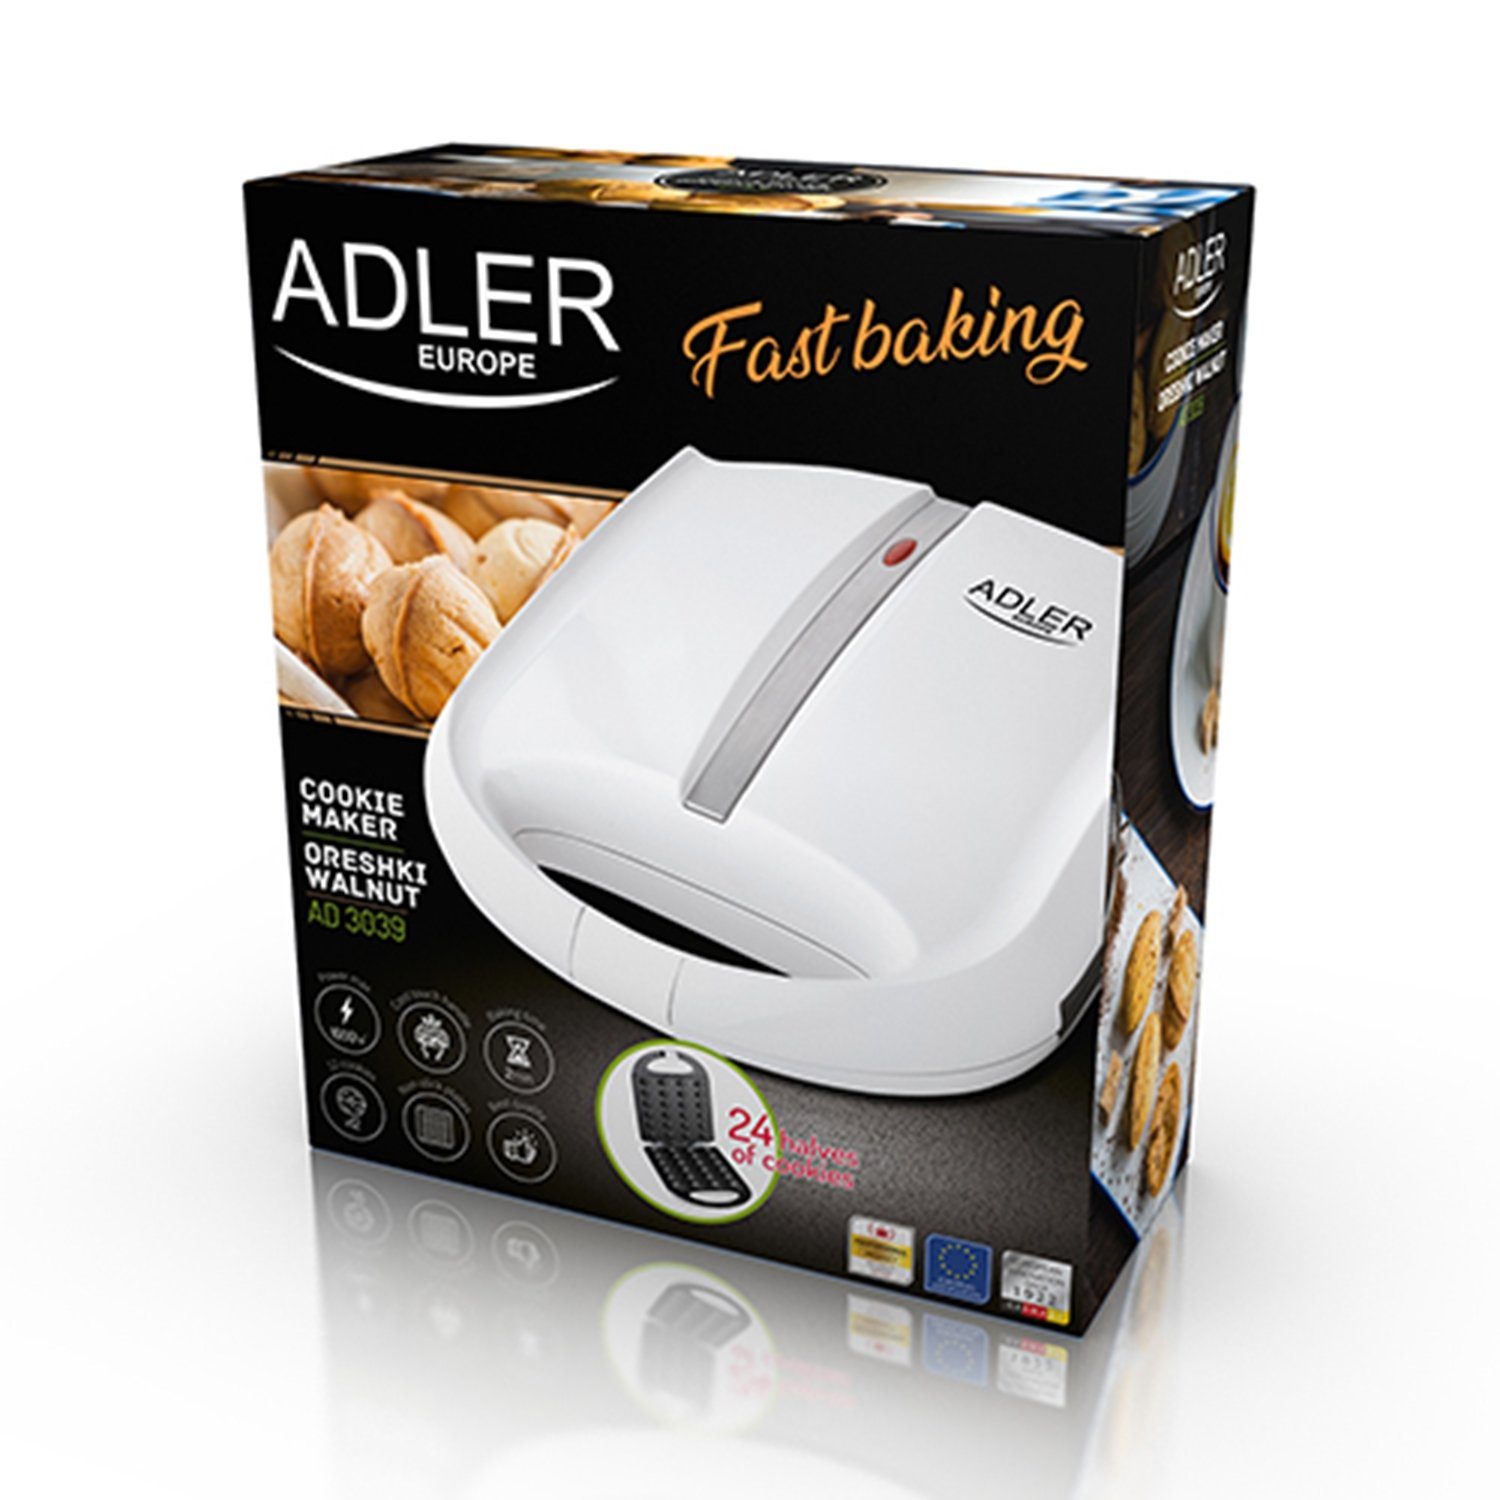 Adler Toaster AD Toaster Haselnüsse Stk. 24 für Erdnüsse 3039, Nüsse